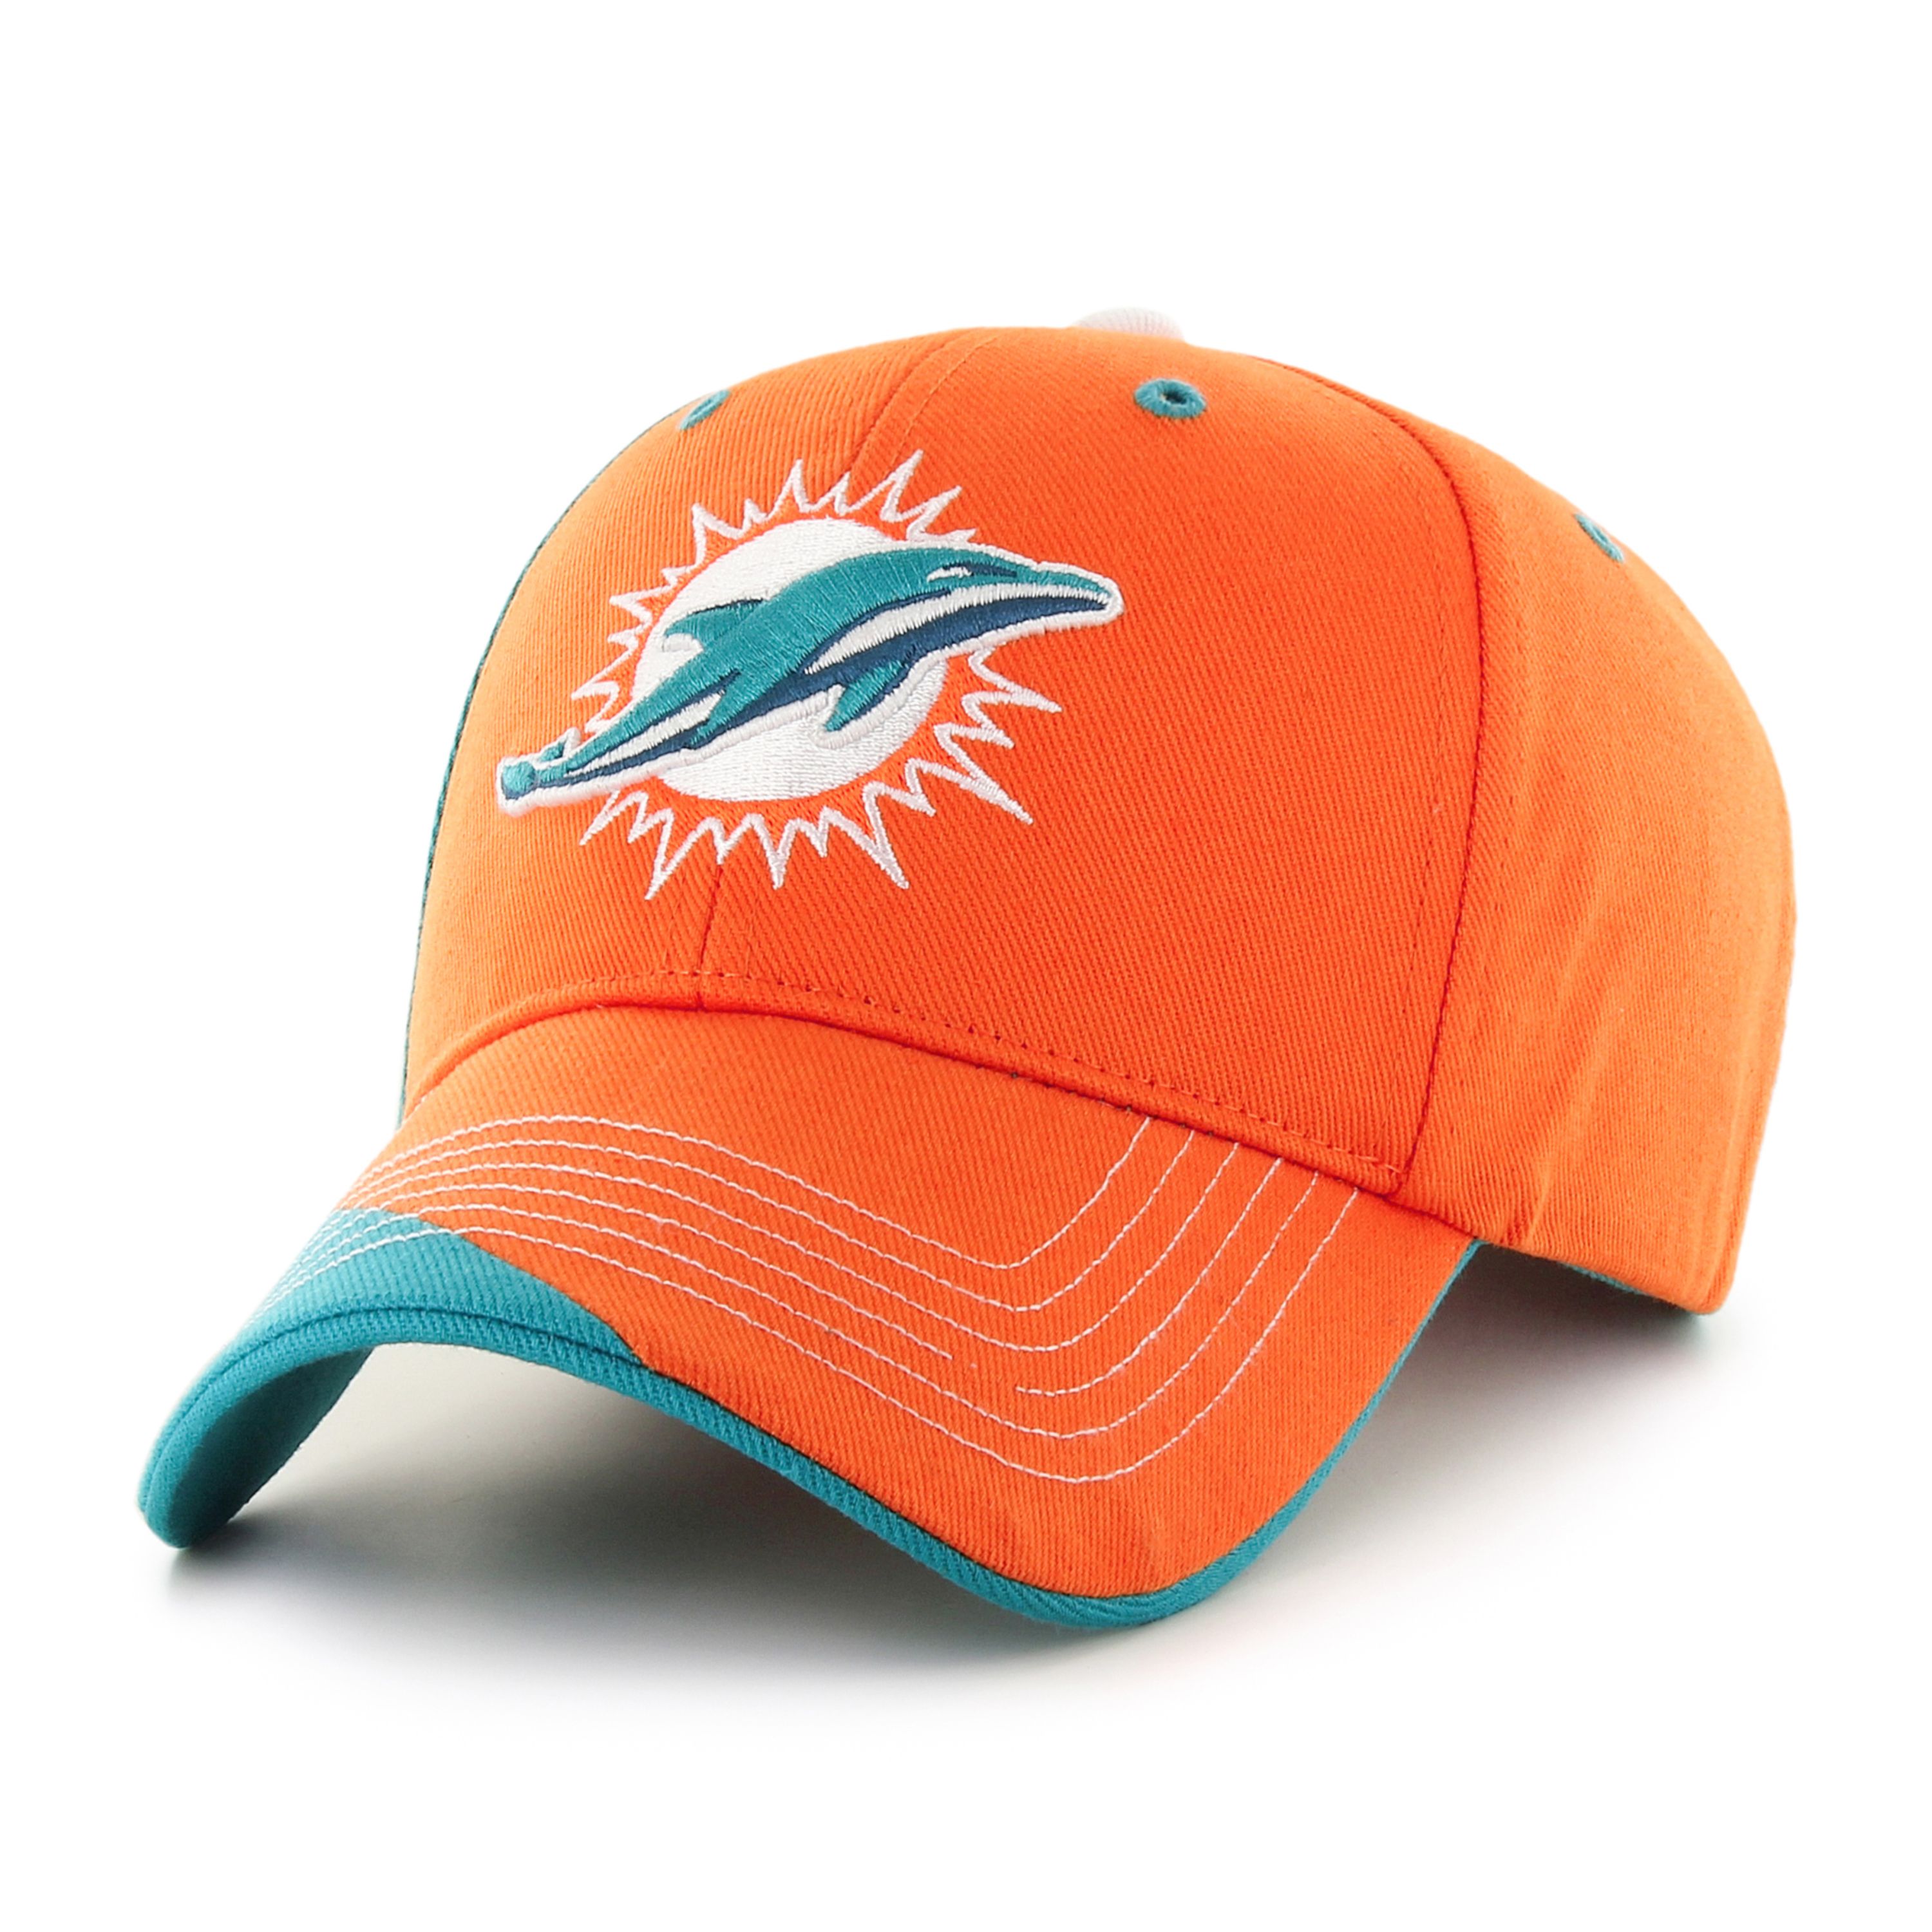 Fan Favorite - NFL Hubris Adjustable Cap, Miami Dolphins - image 1 of 3